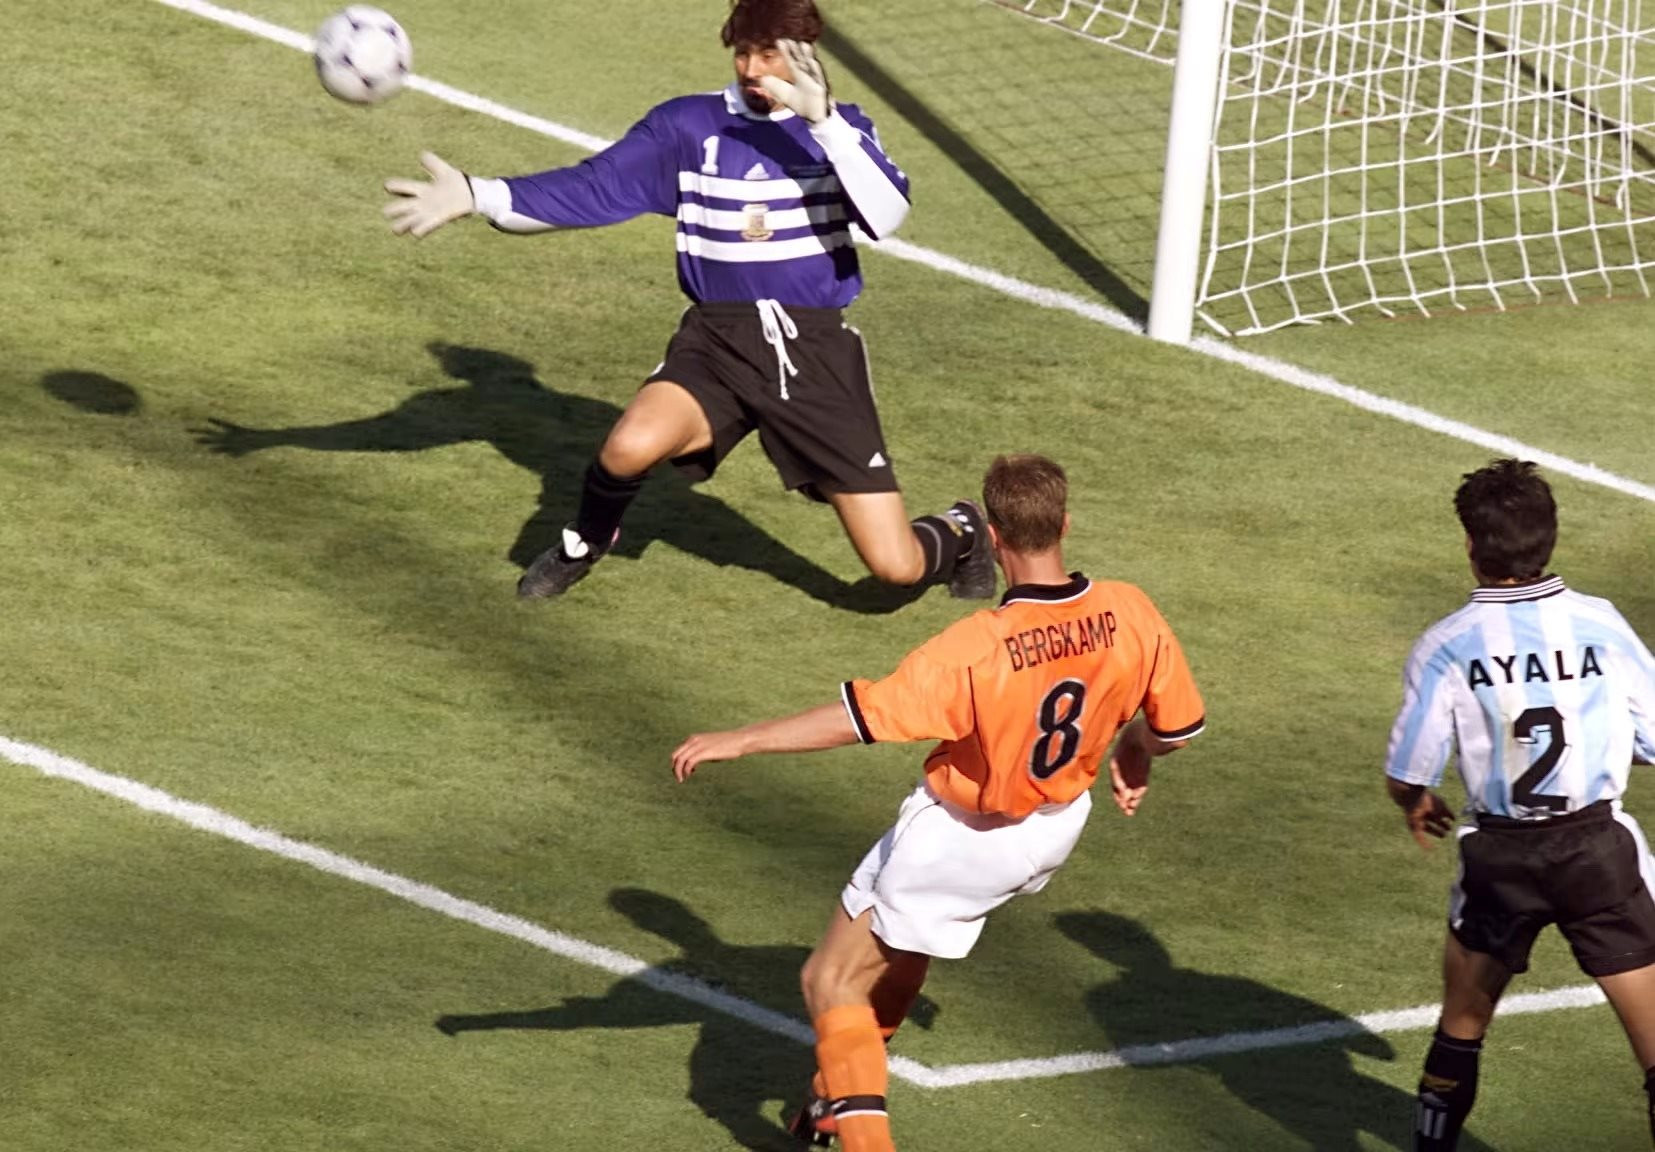 dennis-bergkamp-scores-a-wonder-goal-for-the-netherlands-against-argentina_11zon.jpg